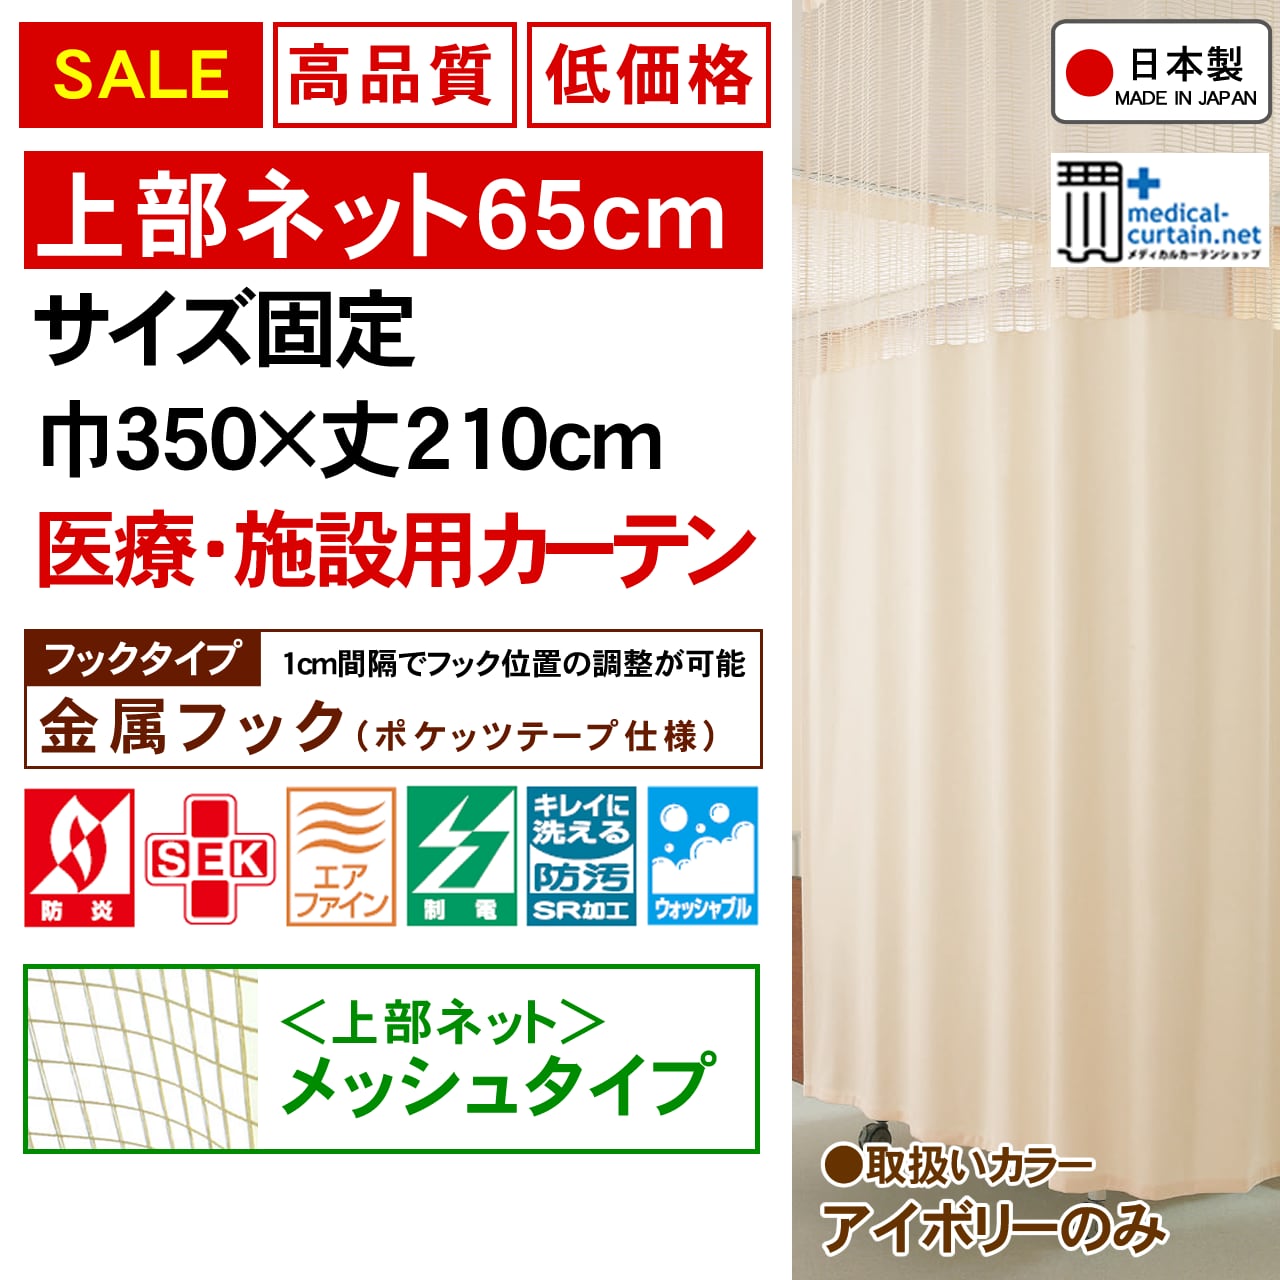 【SALE1点のみ】巾350×丈210cm高機能医療用カーテン【金属フック】